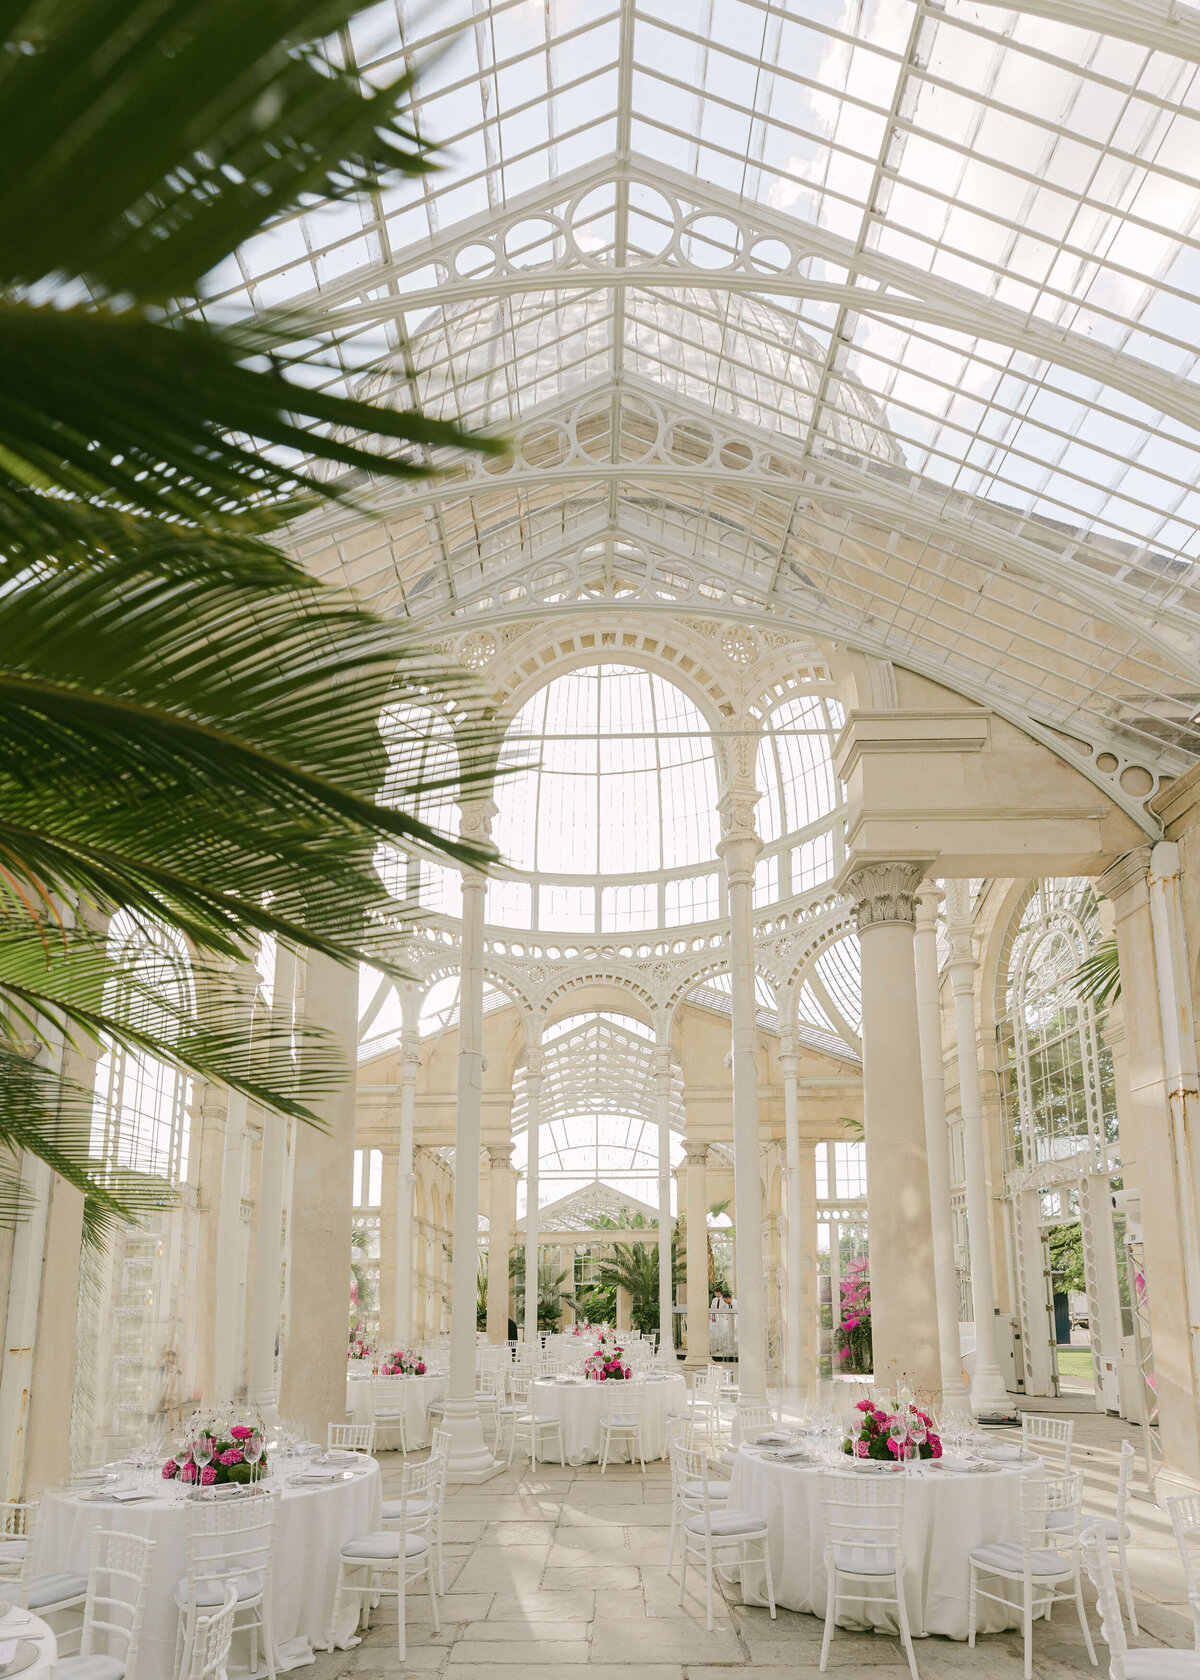 chloe-winstanley-weddings-syon-park-conservatory-dinner-tablescape